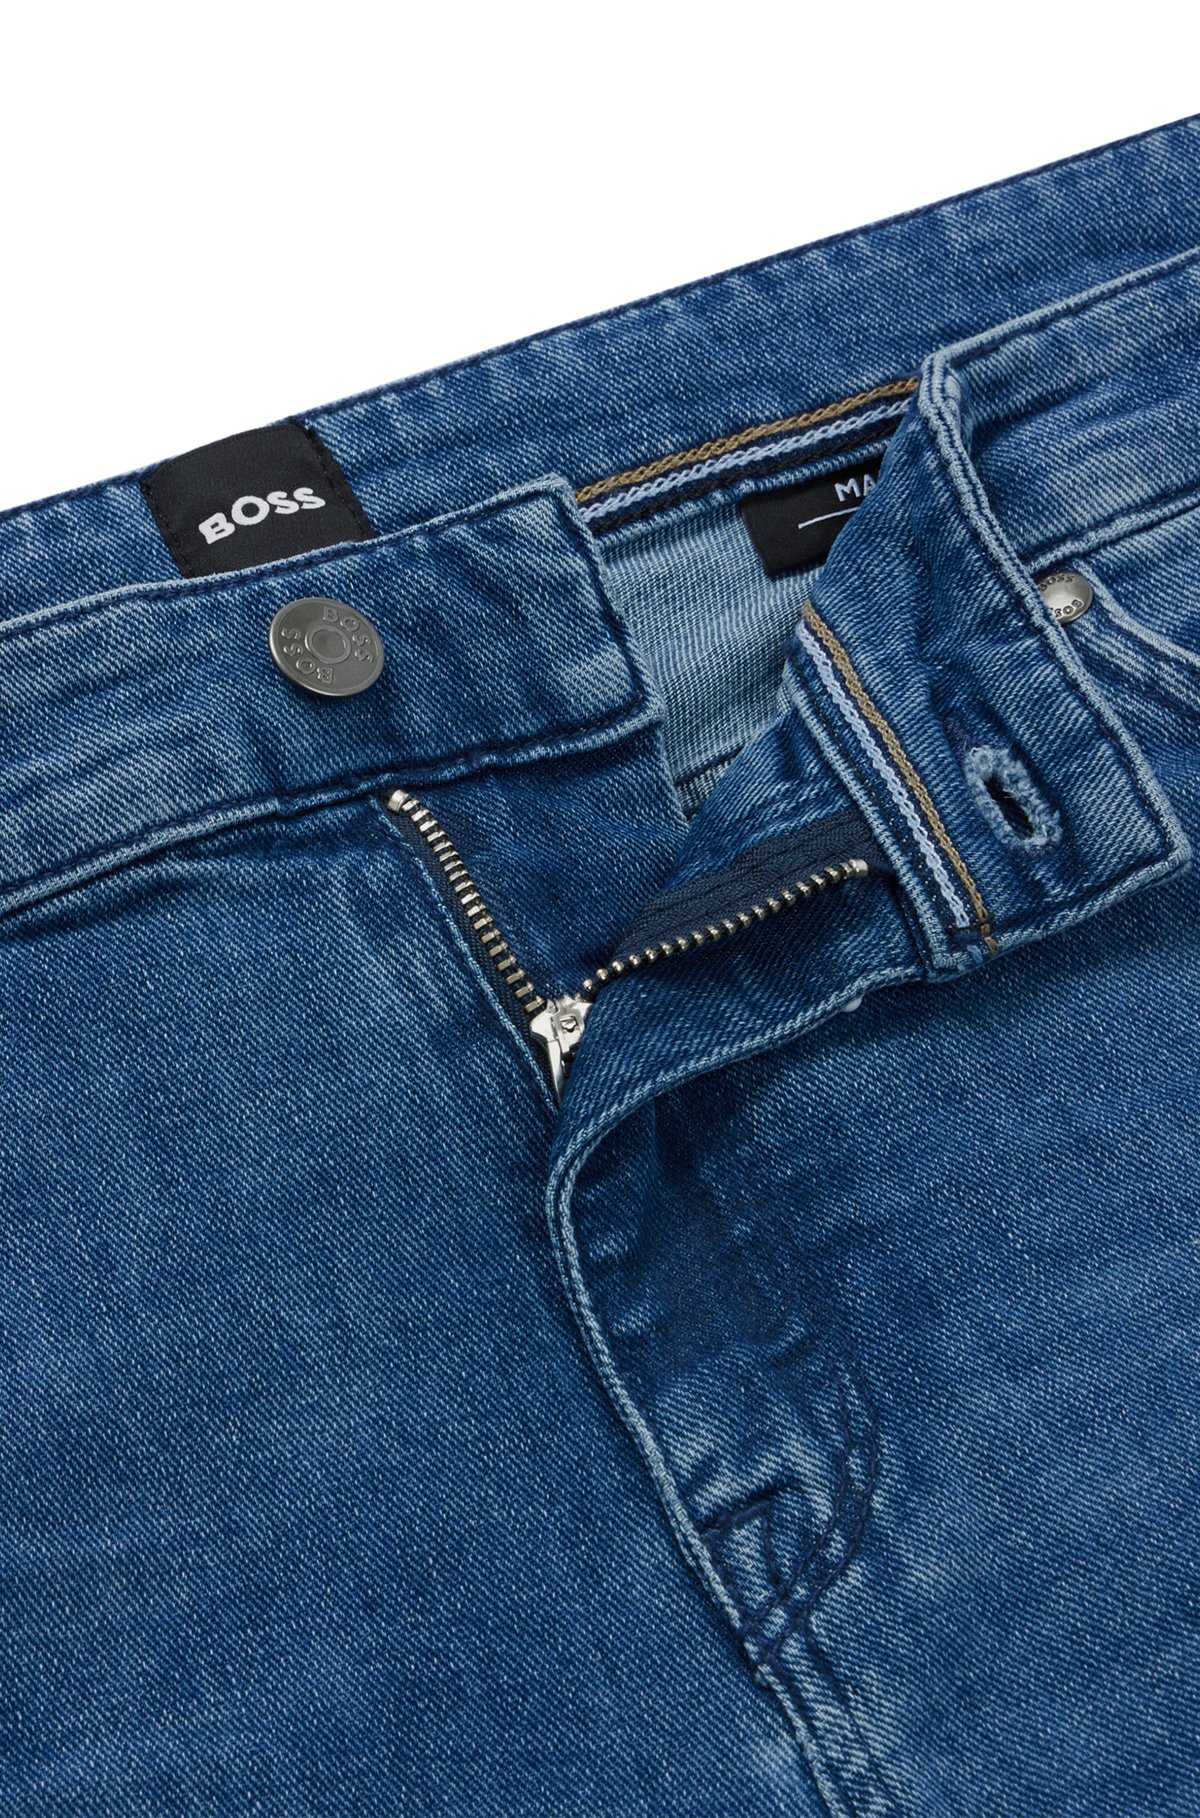 Naturaleza traqueteo Centelleo BOSS - Regular-fit jeans in blue Italian cashmere-touch denim